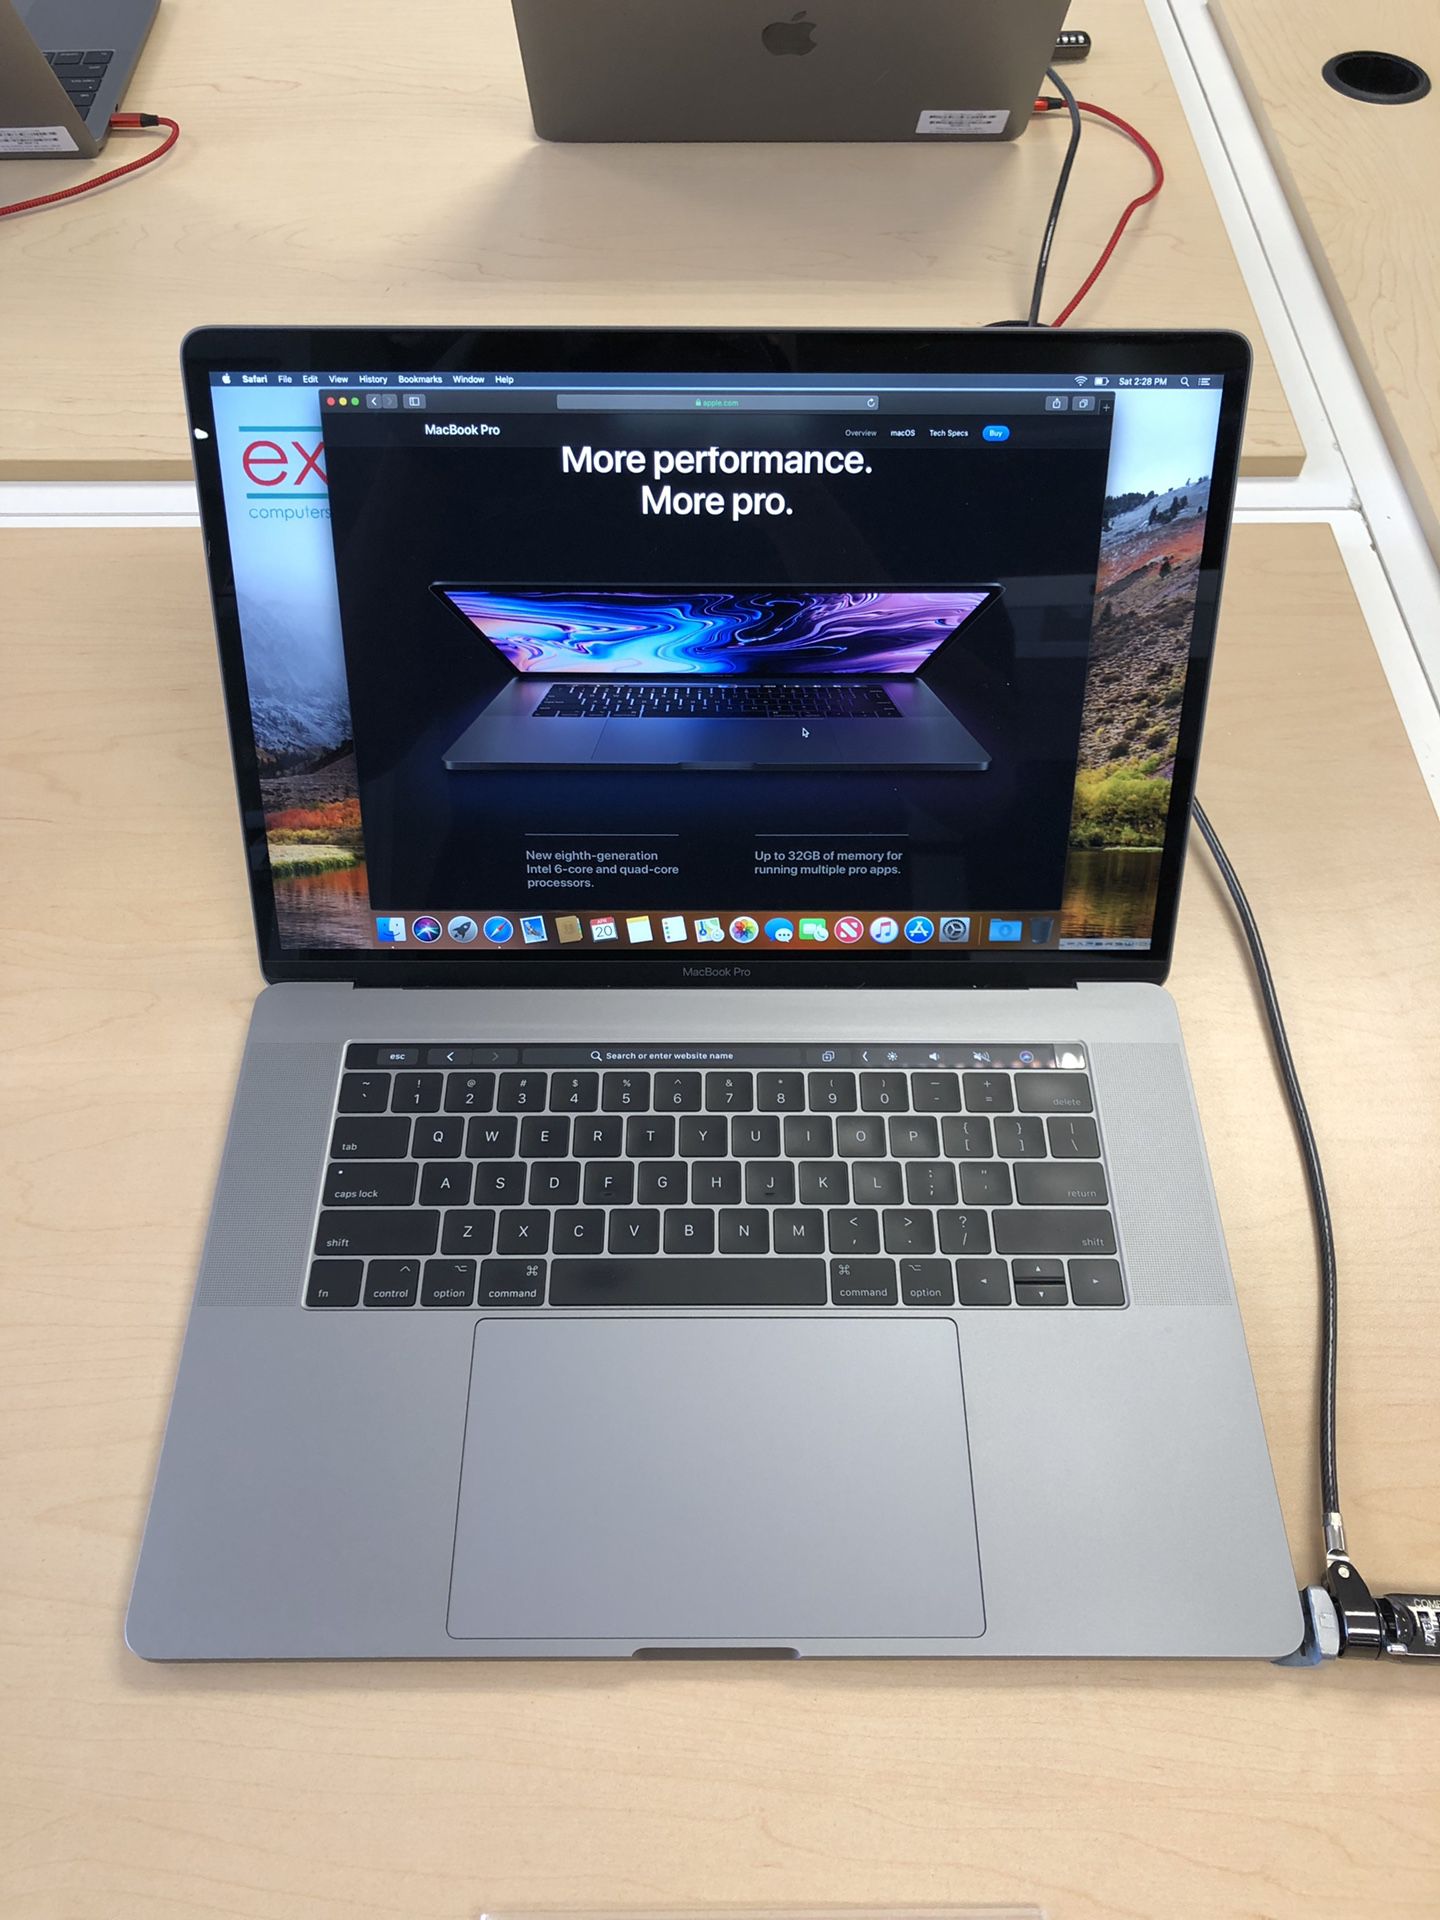 MacBook Pro 15” TouchBar *Intel Core i7/16GB Ram/256GB SSD/Webcam/WiFi*